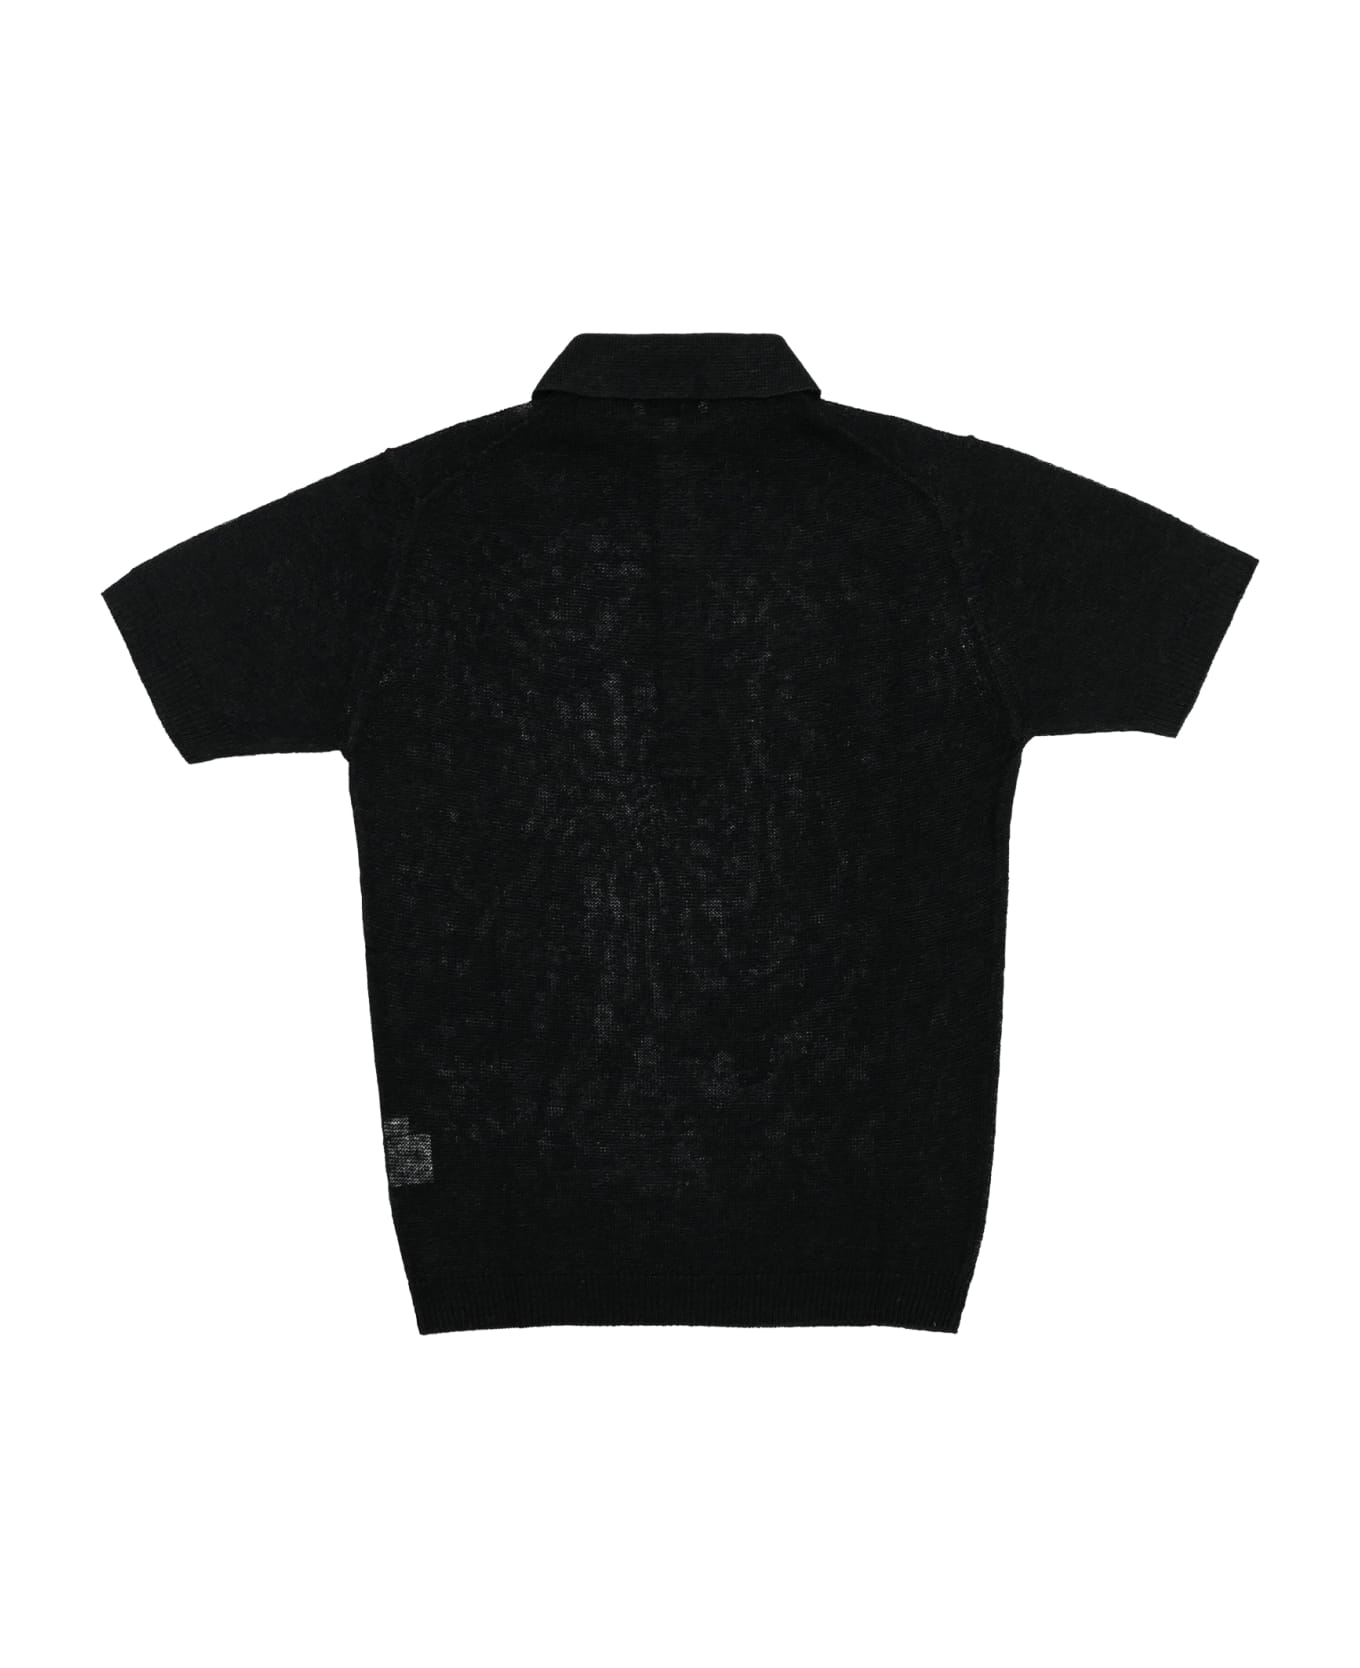 Filippo De Laurentiis Polo Shirt - Black ポロシャツ